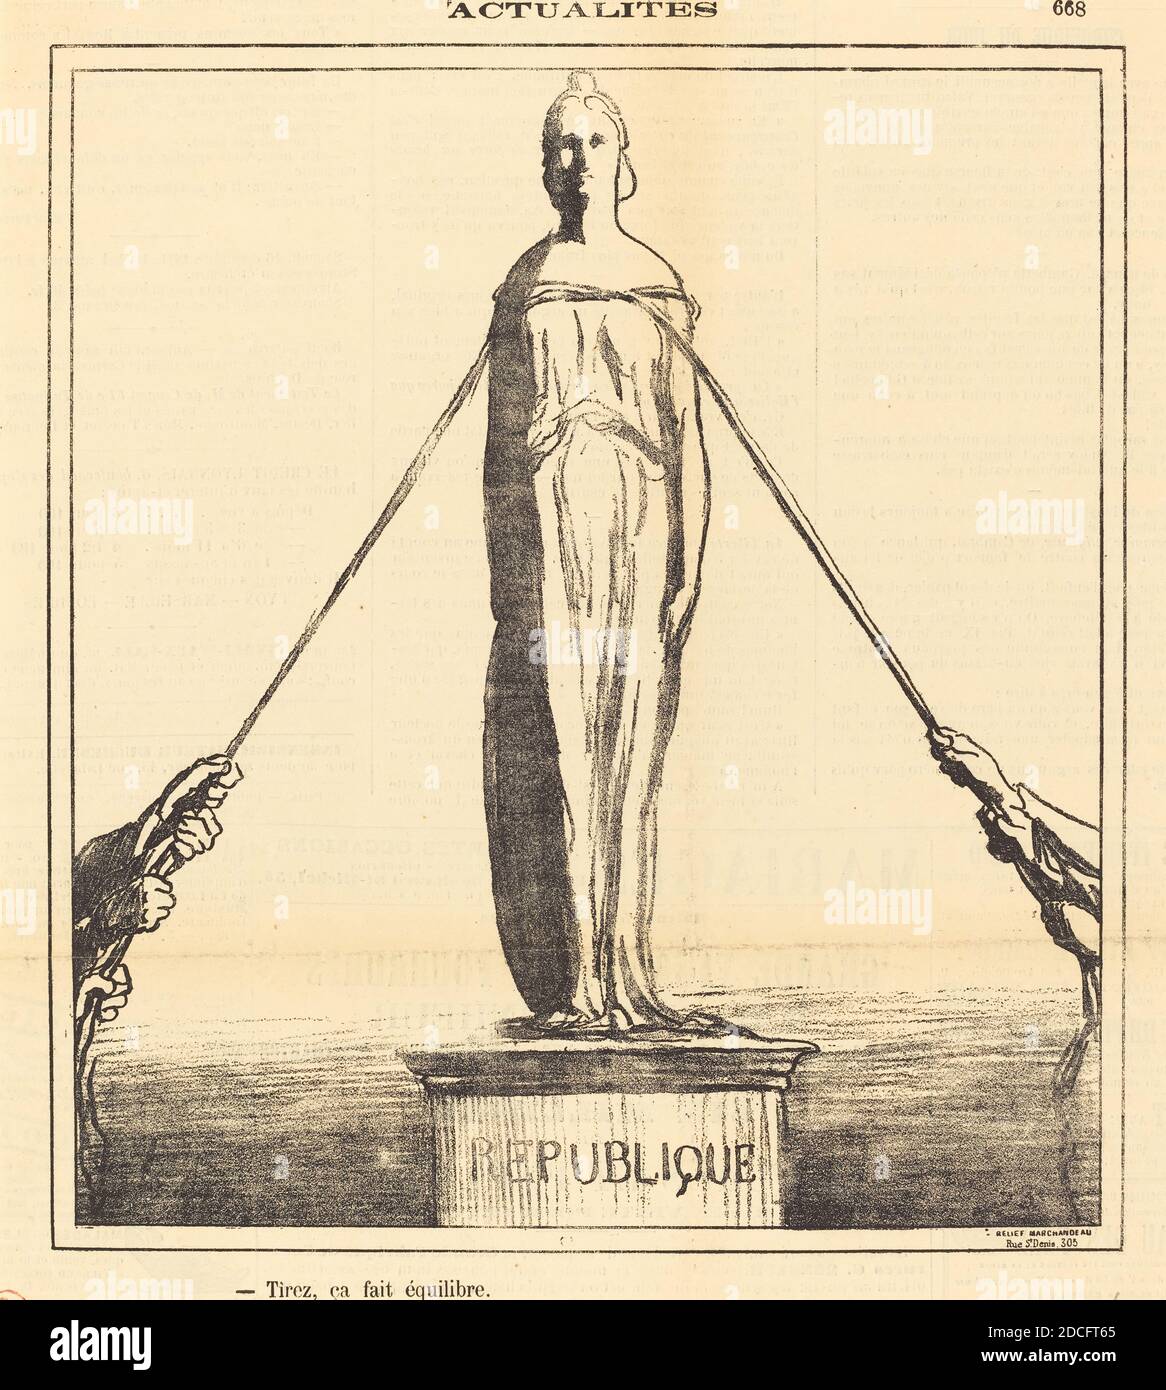 Honoré Daumier, (Künstler), Französisch, 1808 - 1879, Tirez, ça fait équilibre, Actualités, (Serie), 1871, Gillotype auf Zeitungspapier Stockfoto